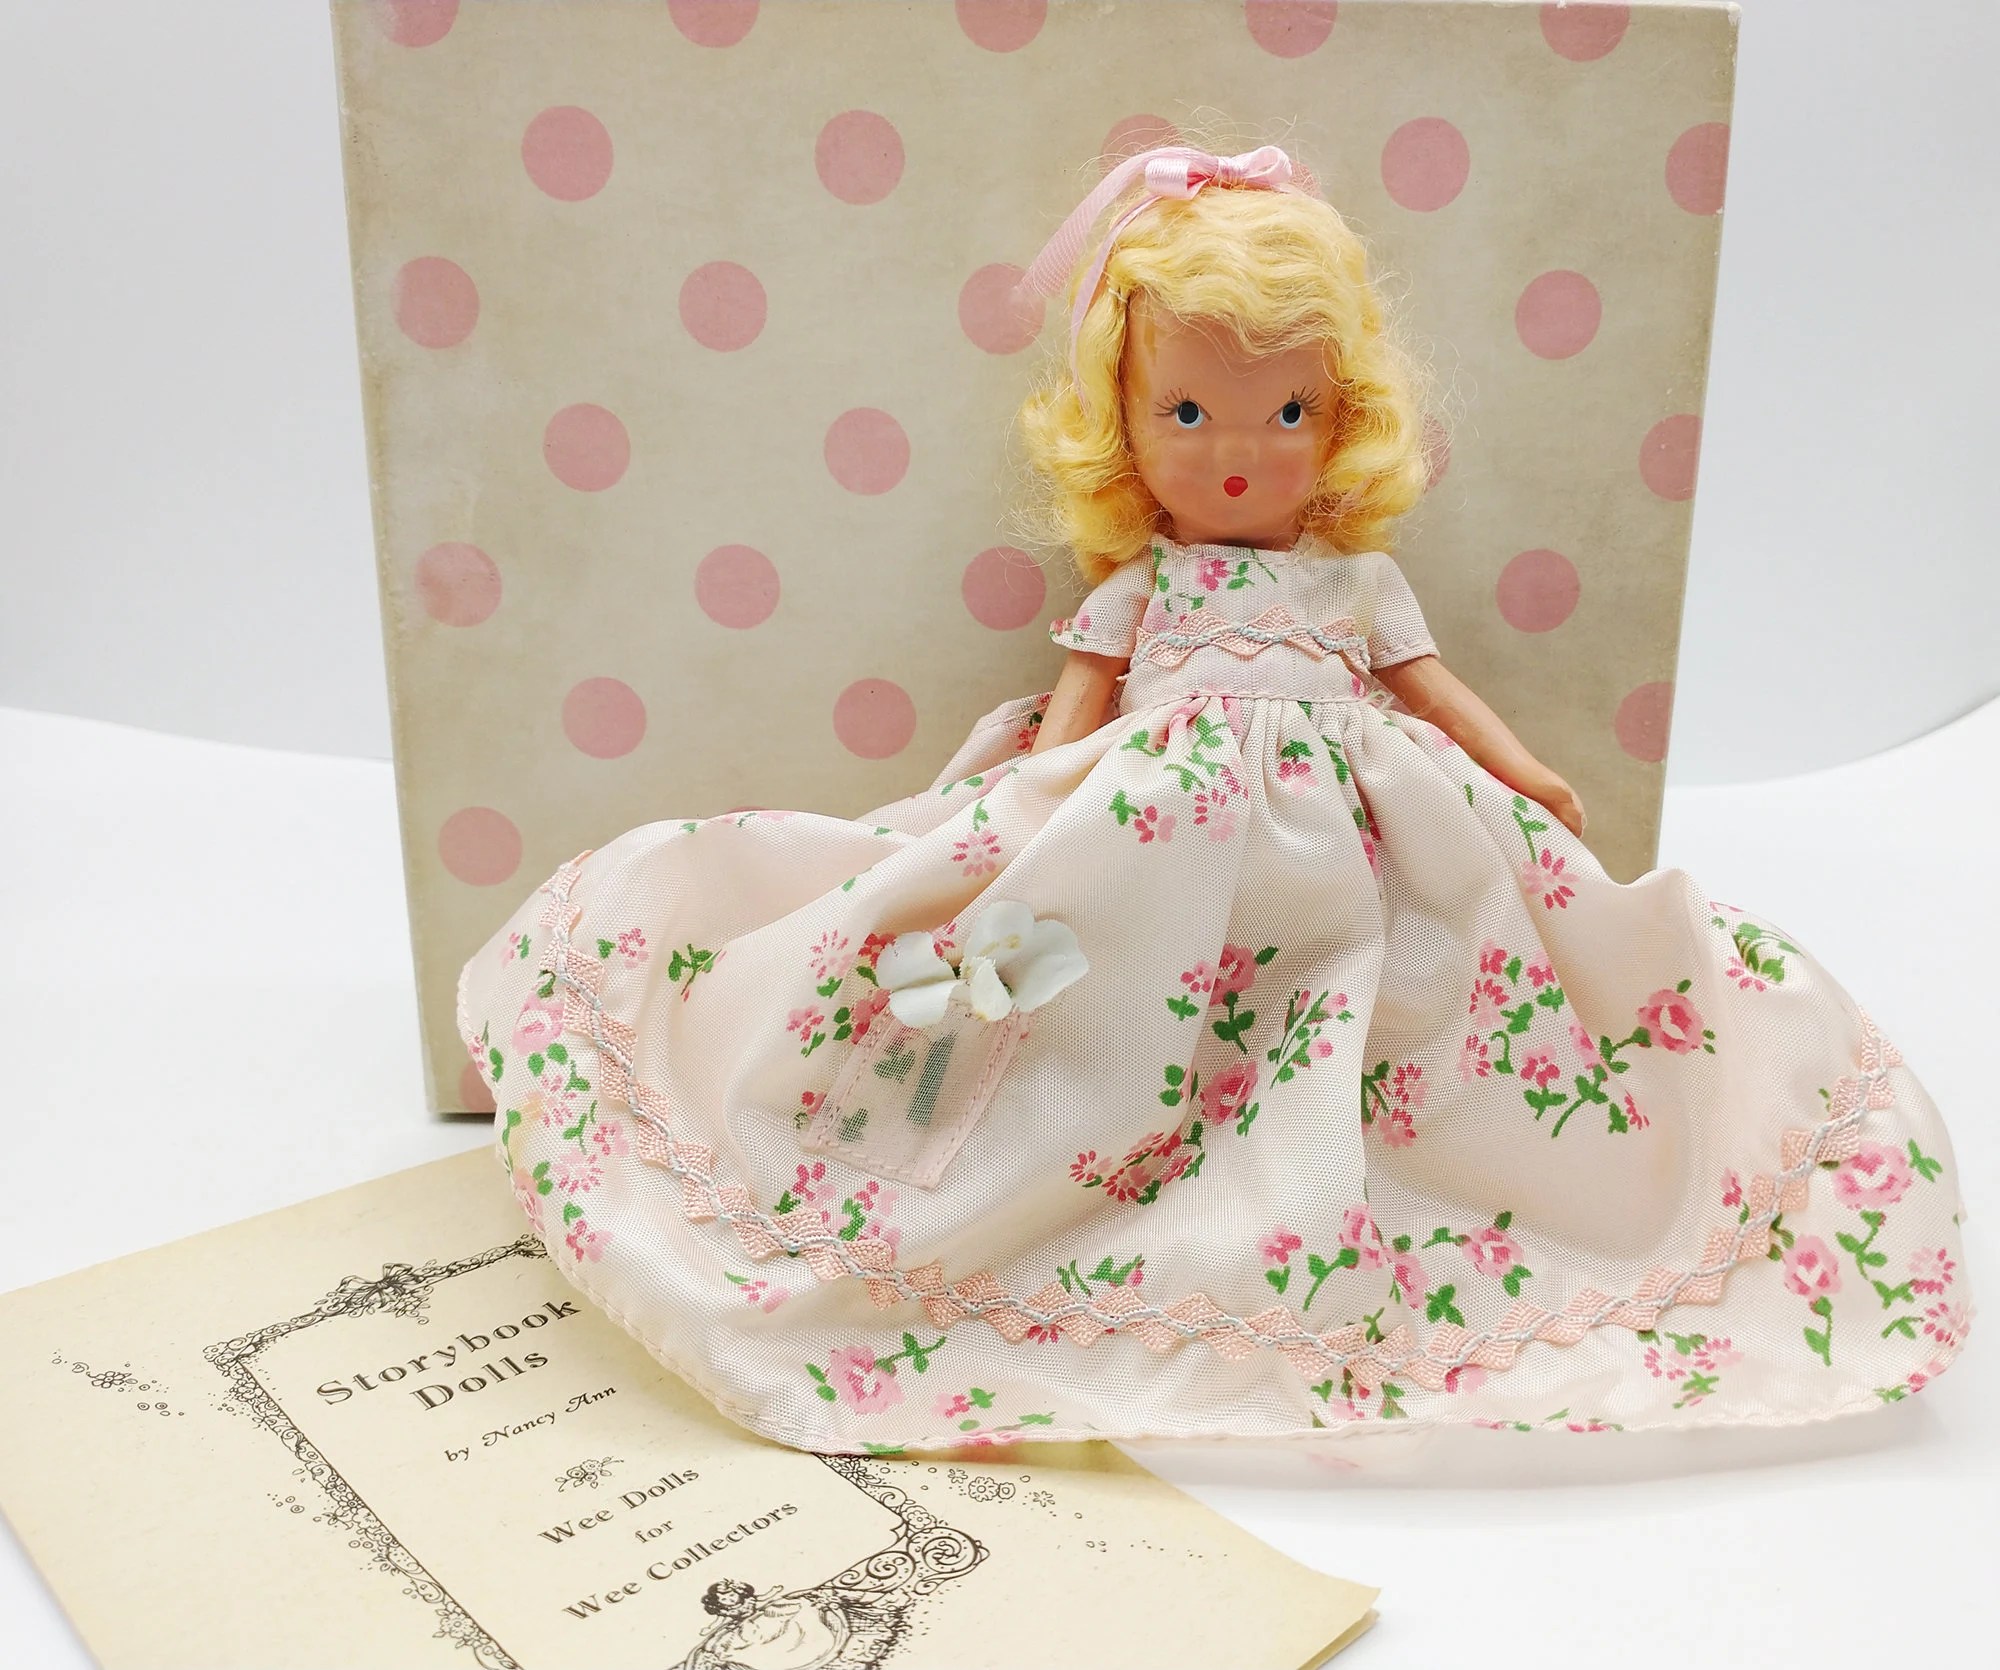 Nancy Ann Storybook Ring Around the Rosie #159 Girl Doll - Storybook Series - Vintage 5.5” Bisque, Original Box, Brace, Booklet 1936-1948